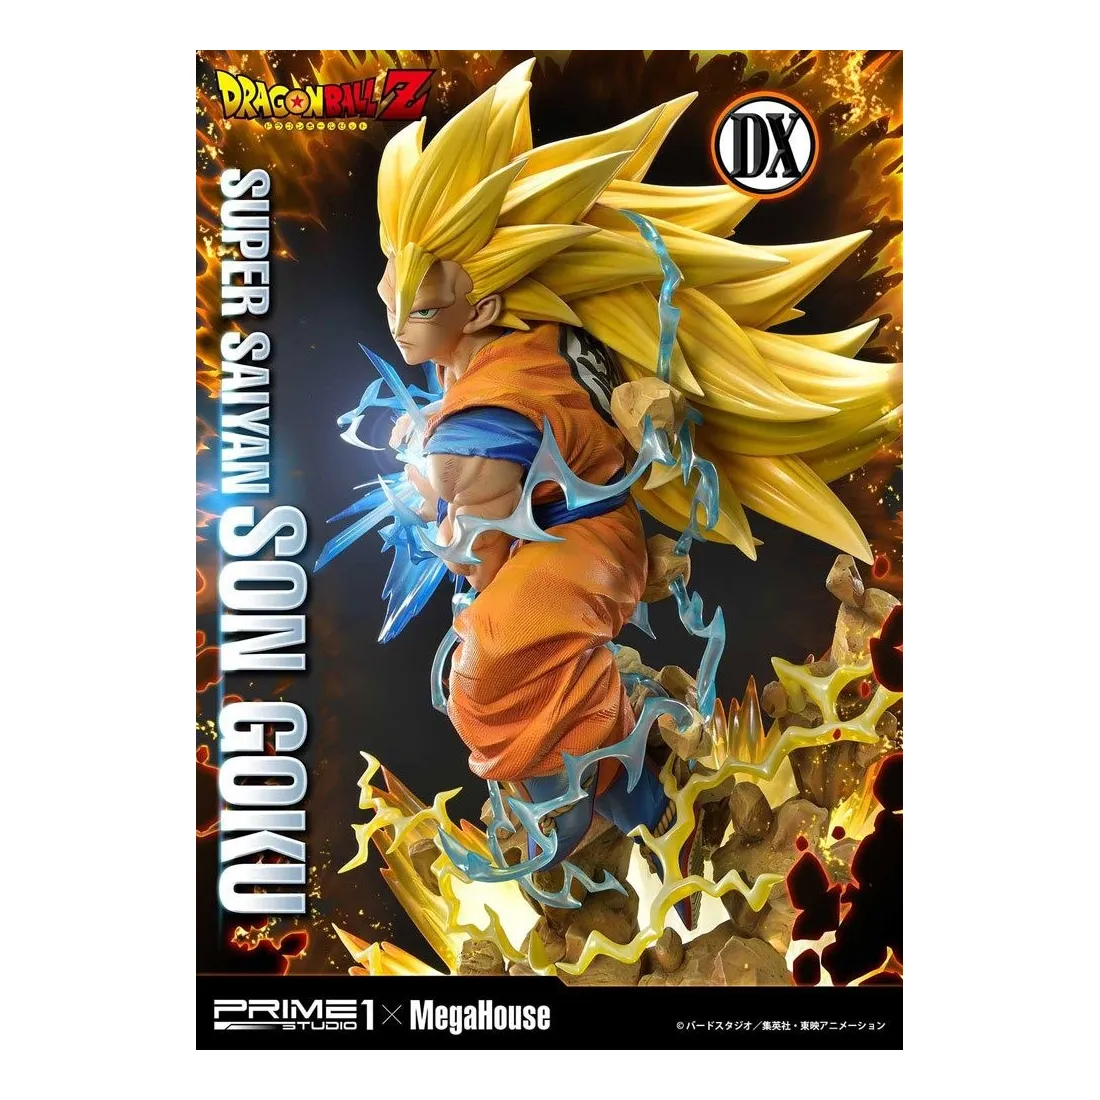 Dragon Ball Z statuette Super Saiyan Son Goku Deluxe Version Prime1